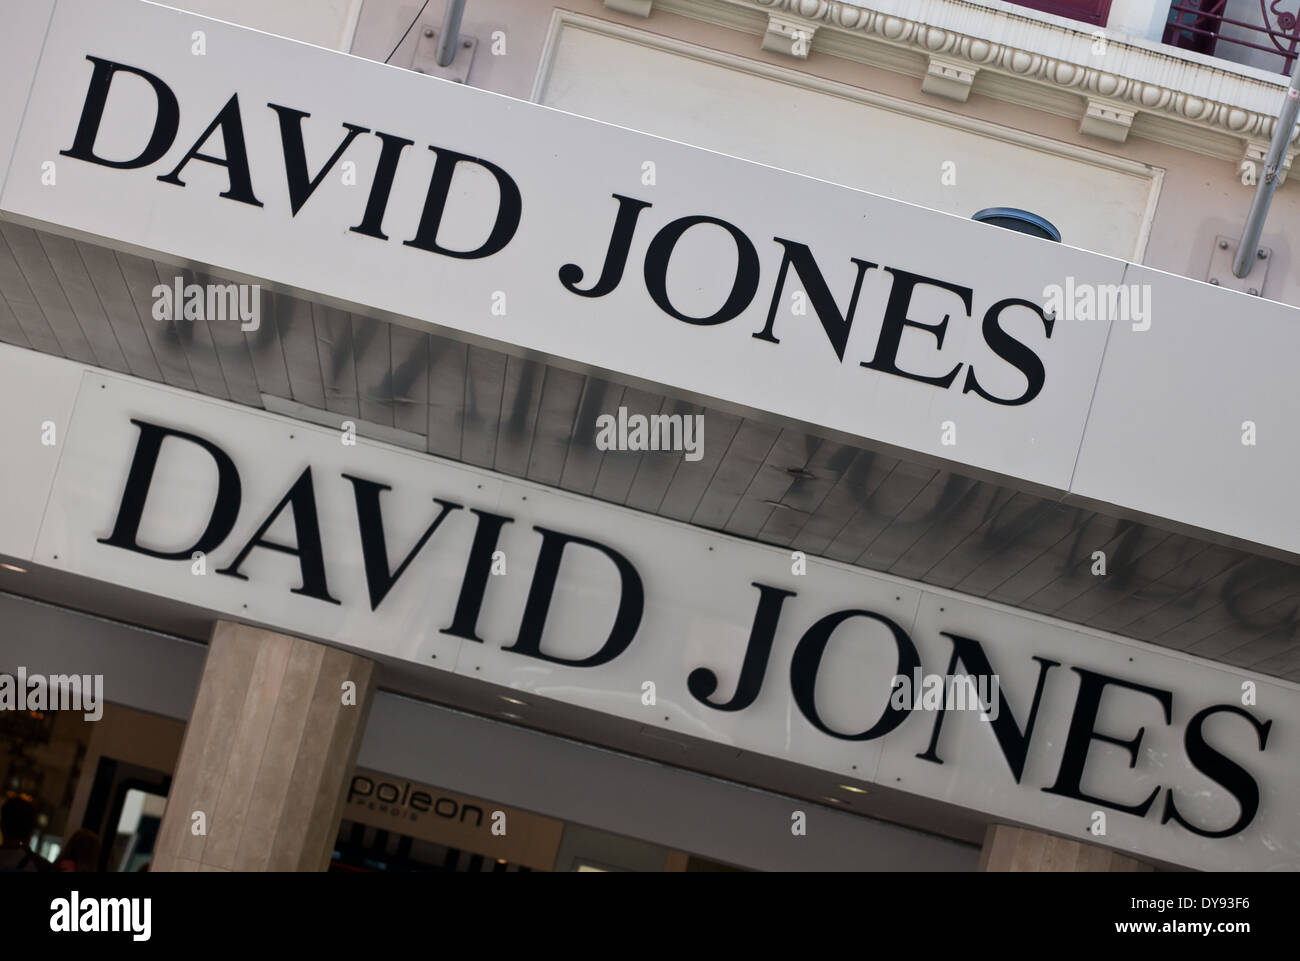 David jones sydney hi-res stock photography and images - Alamy